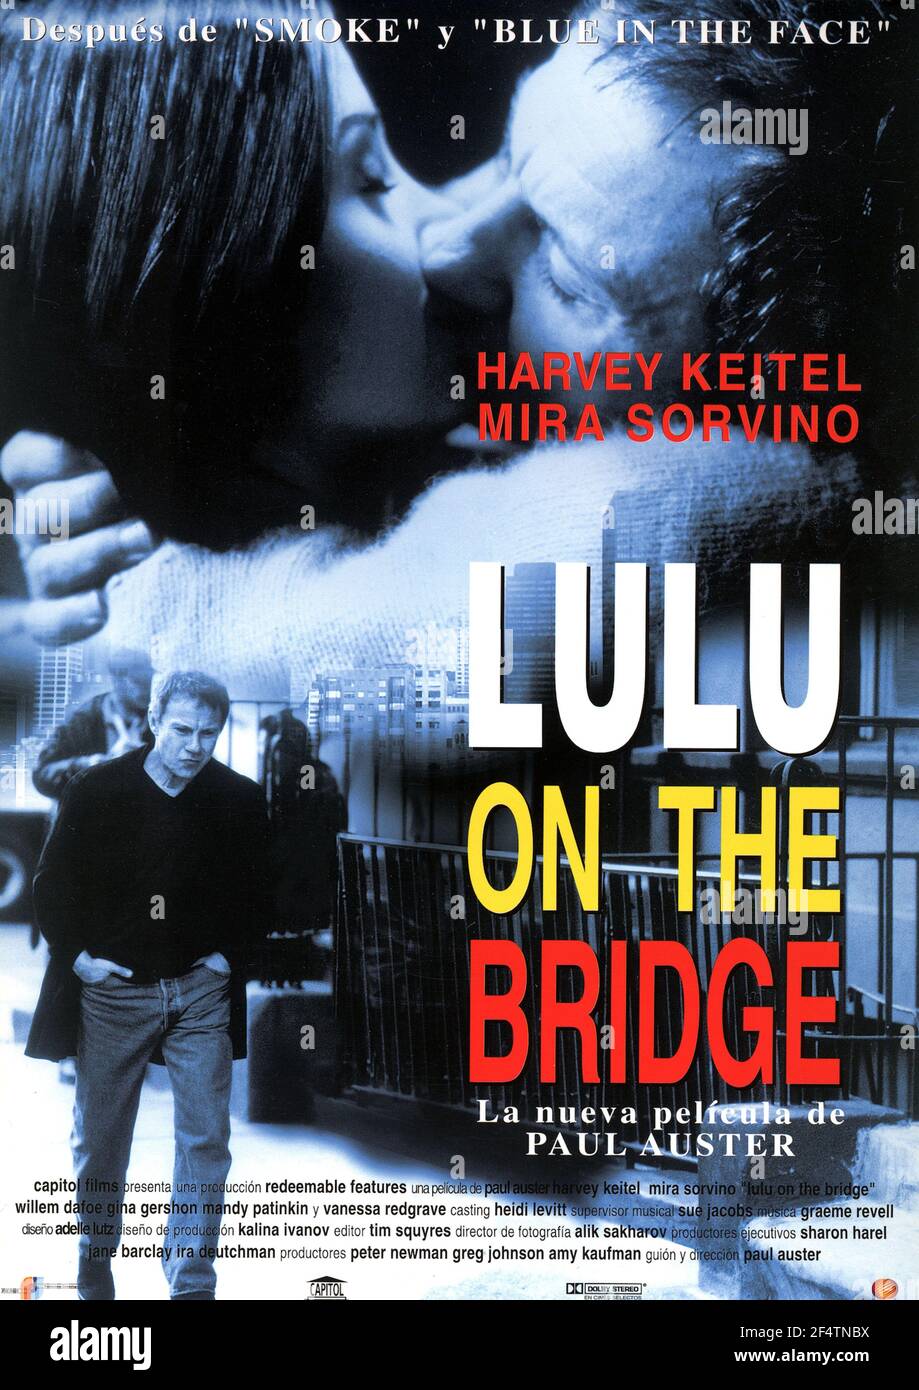 LULU ON THE BRIDGE (1998), directed by PAUL AUSTER. Credit: CAPITOL FILMS /  Album Stock Photo - Alamy